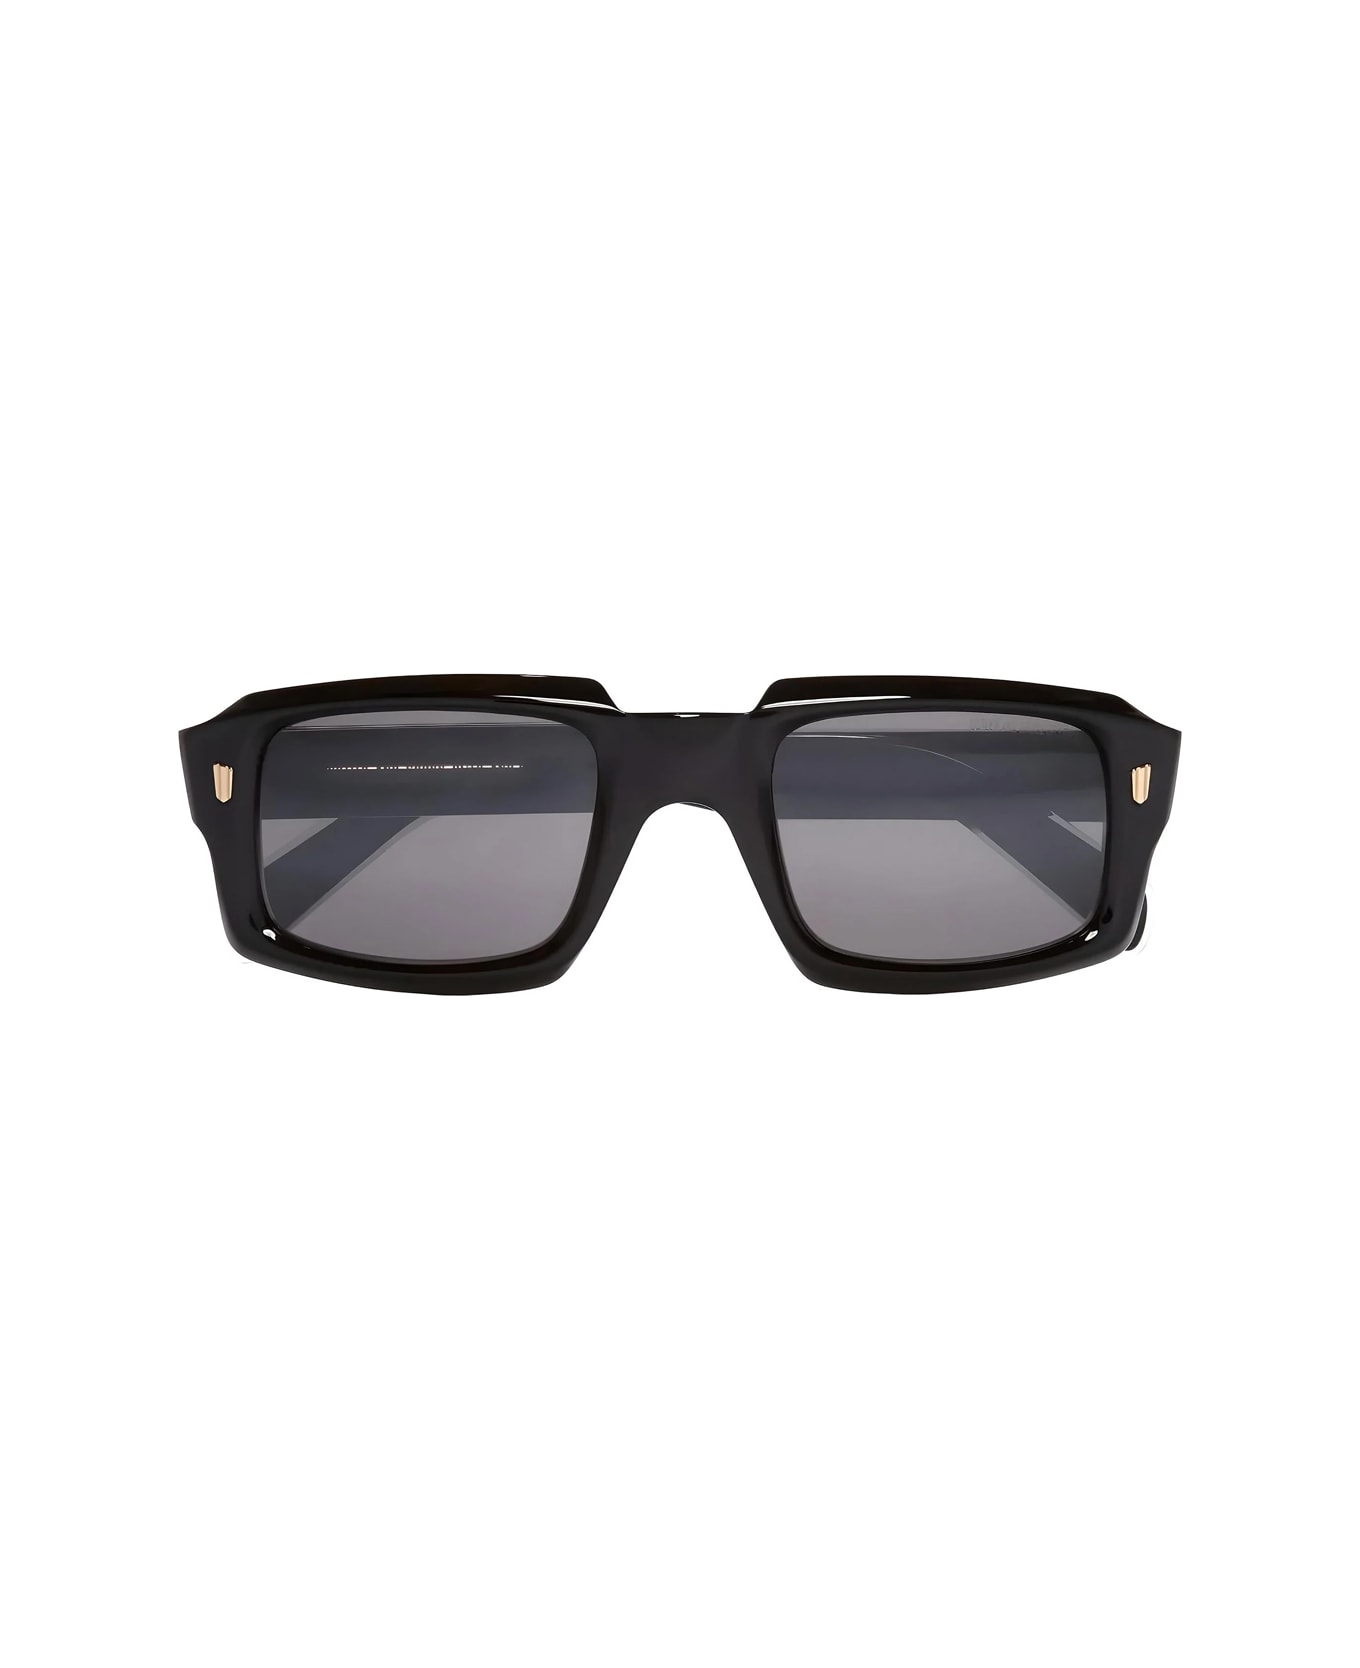 Cutler and Gross 9495 01 Black Sunglasses - Nero